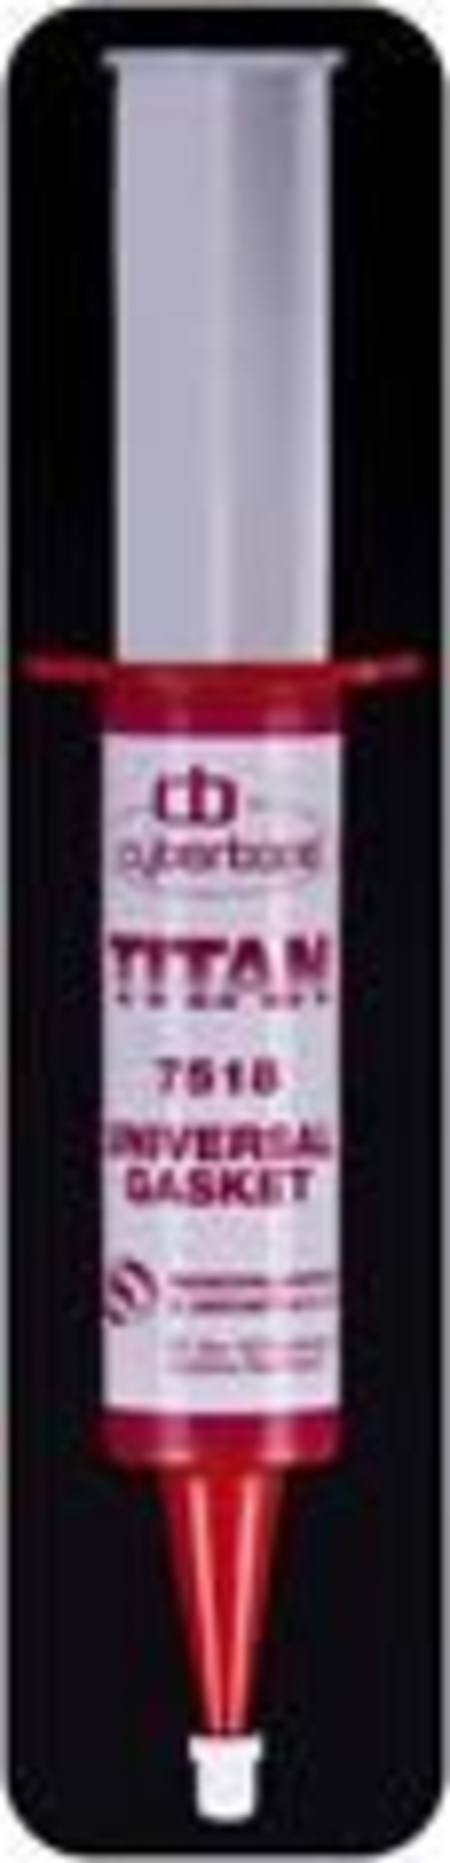 Buy TITAN 7518 UNIVERSAL GASKET 25ml SYRINGE in NZ. 